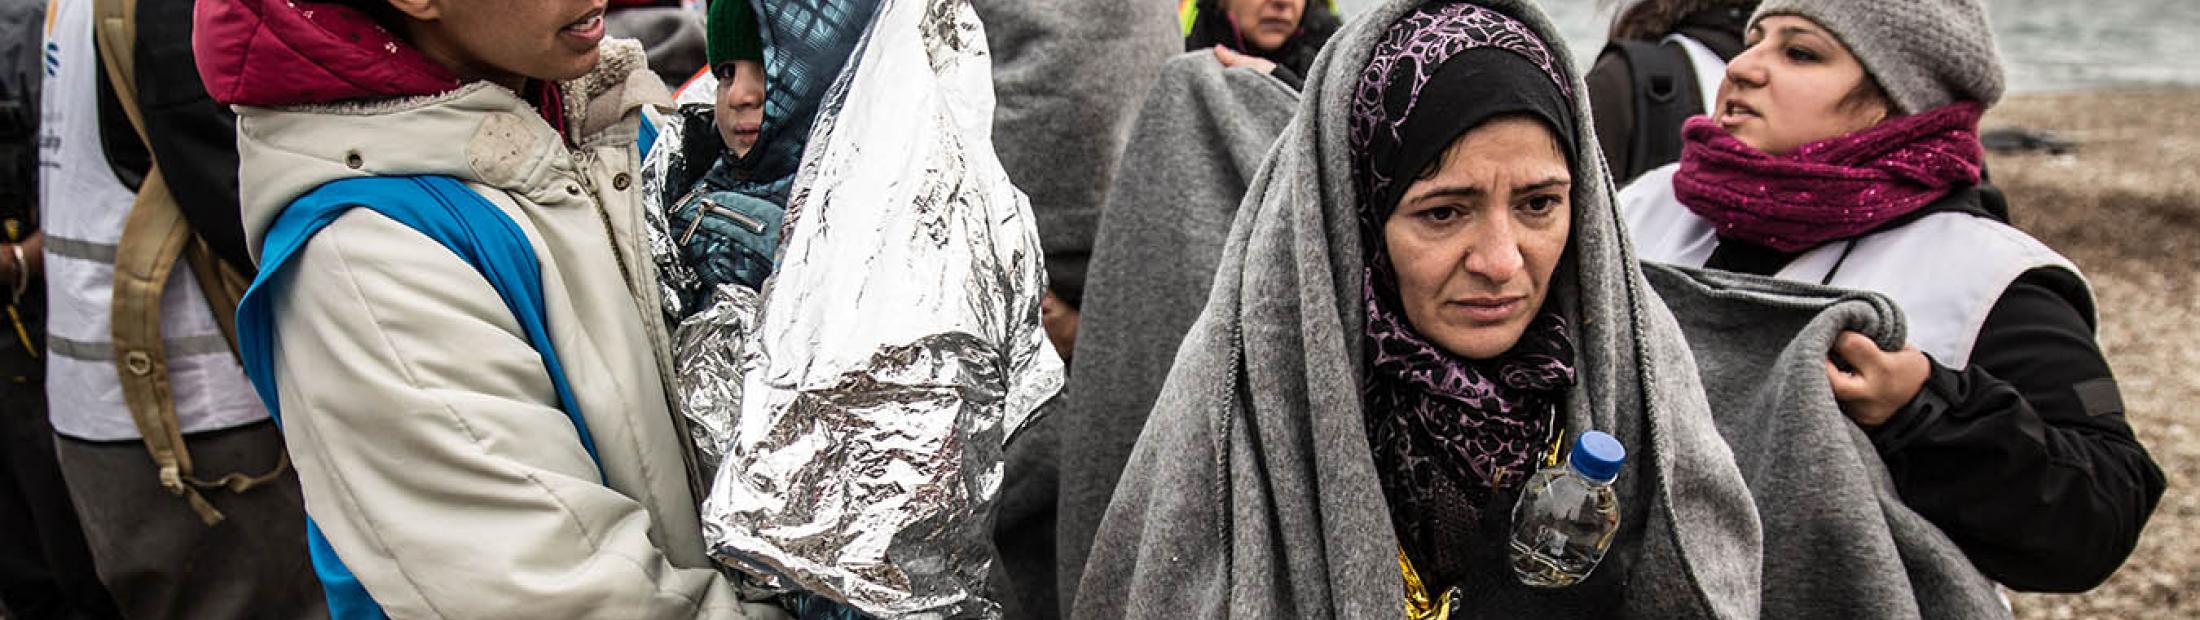 Refugiados en Europa: Italia y España, dos vías de entrada en aumento